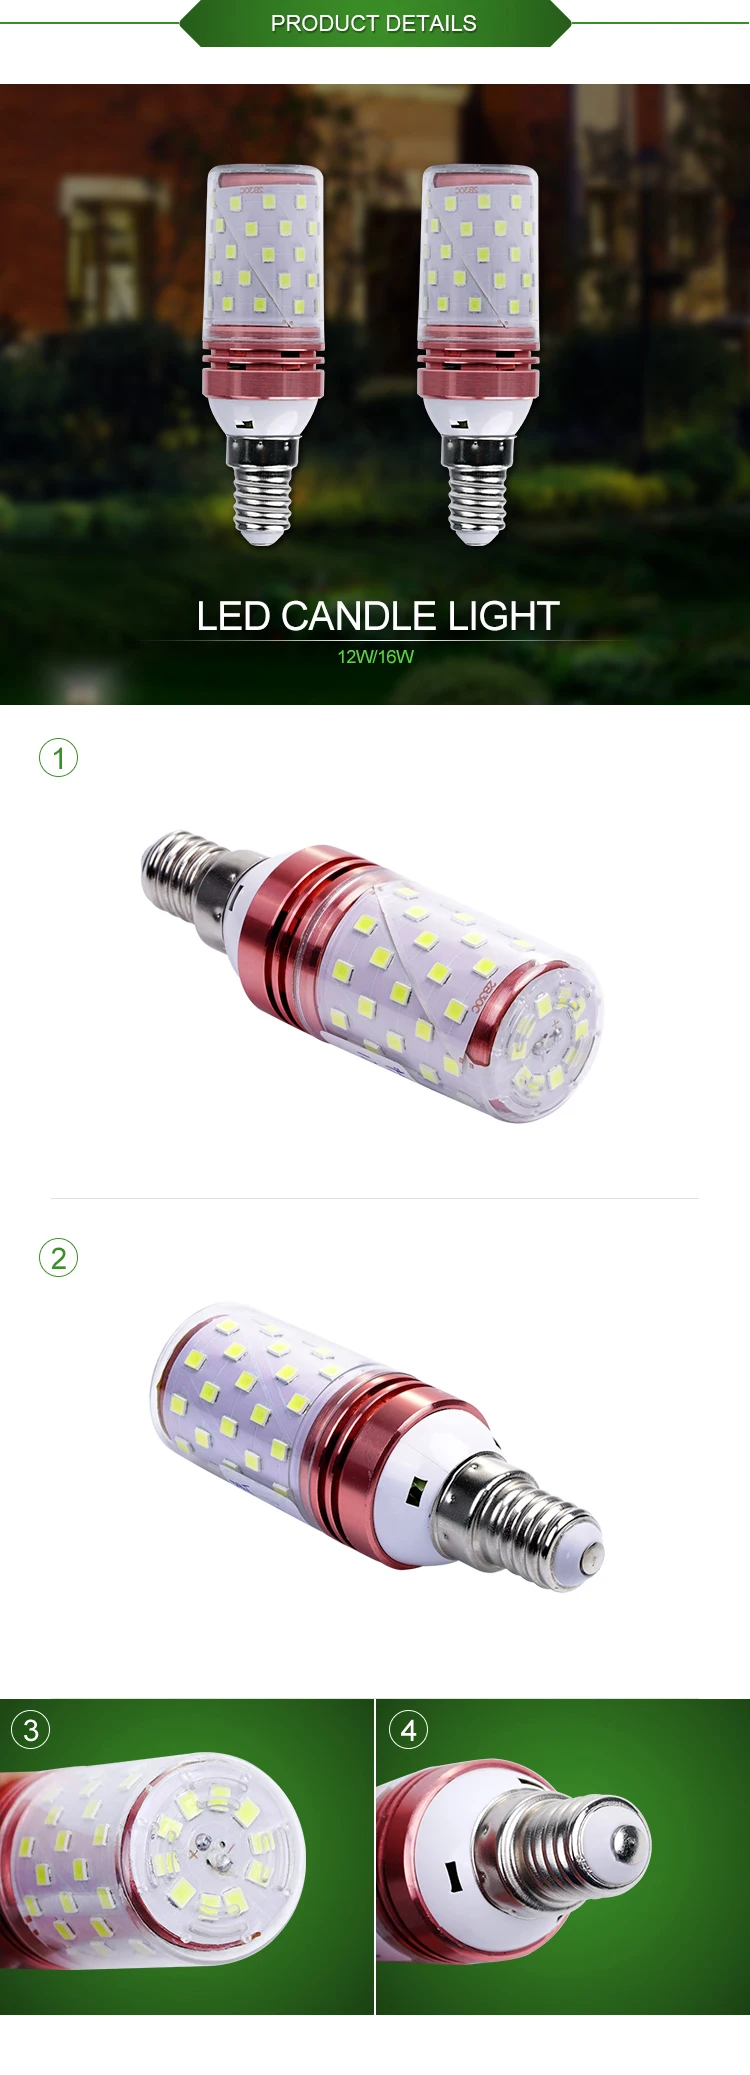 China wholesale 220v corn led light bulbs E14 12 16 watts Energy Saving Lamp warm white Led Bulb Light